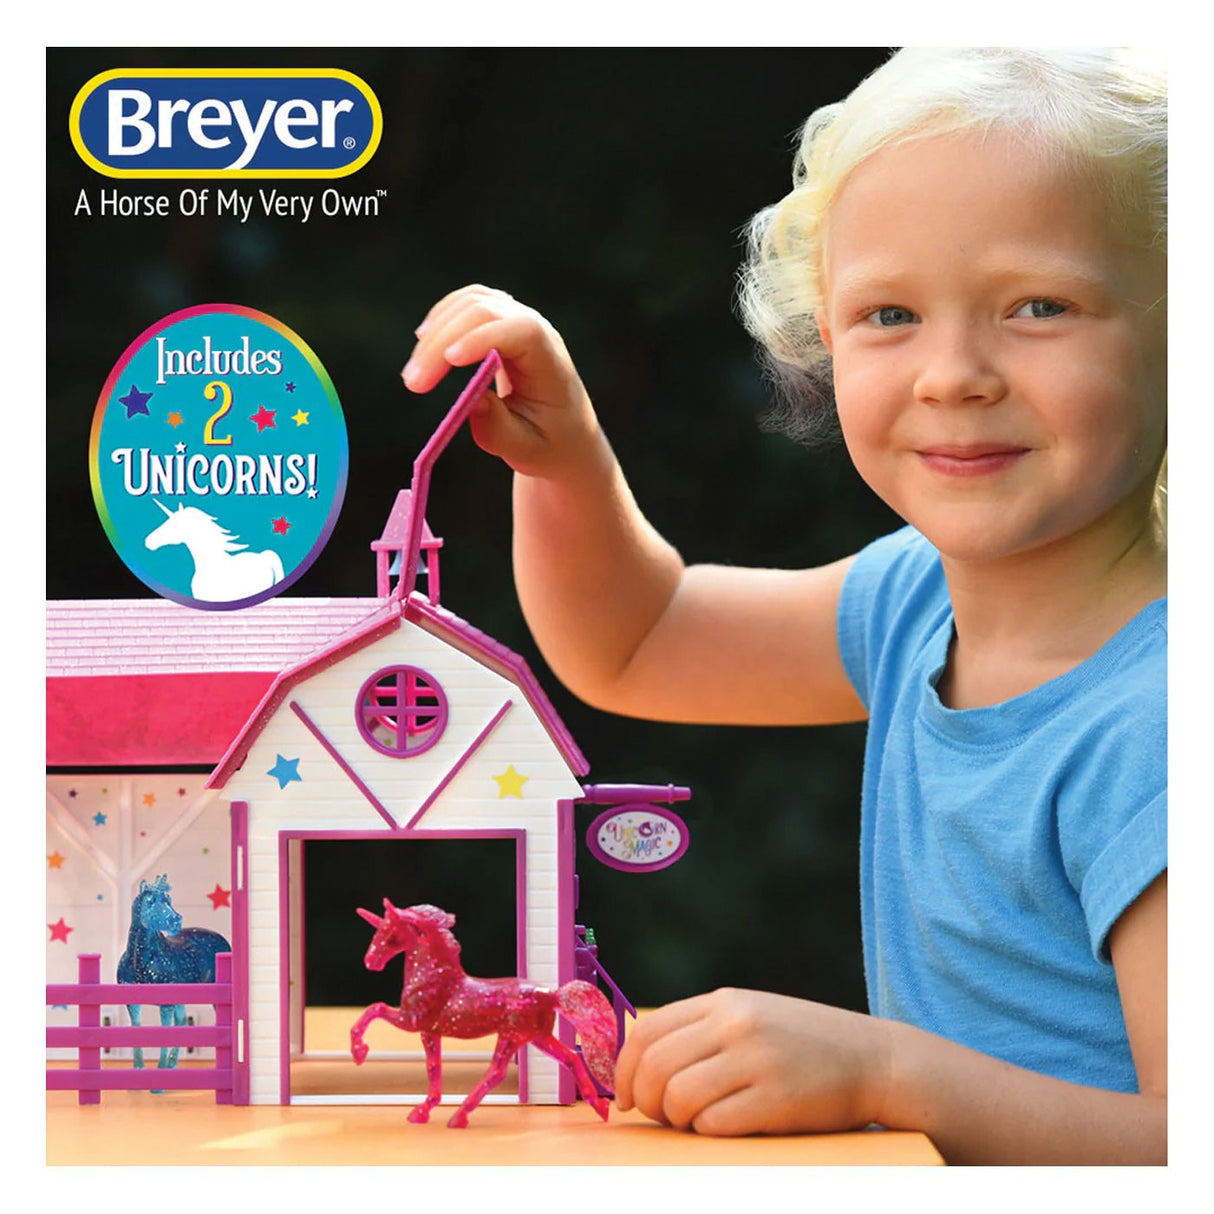 Coffret de jeu Breyer Unicorn Magic Sparkle